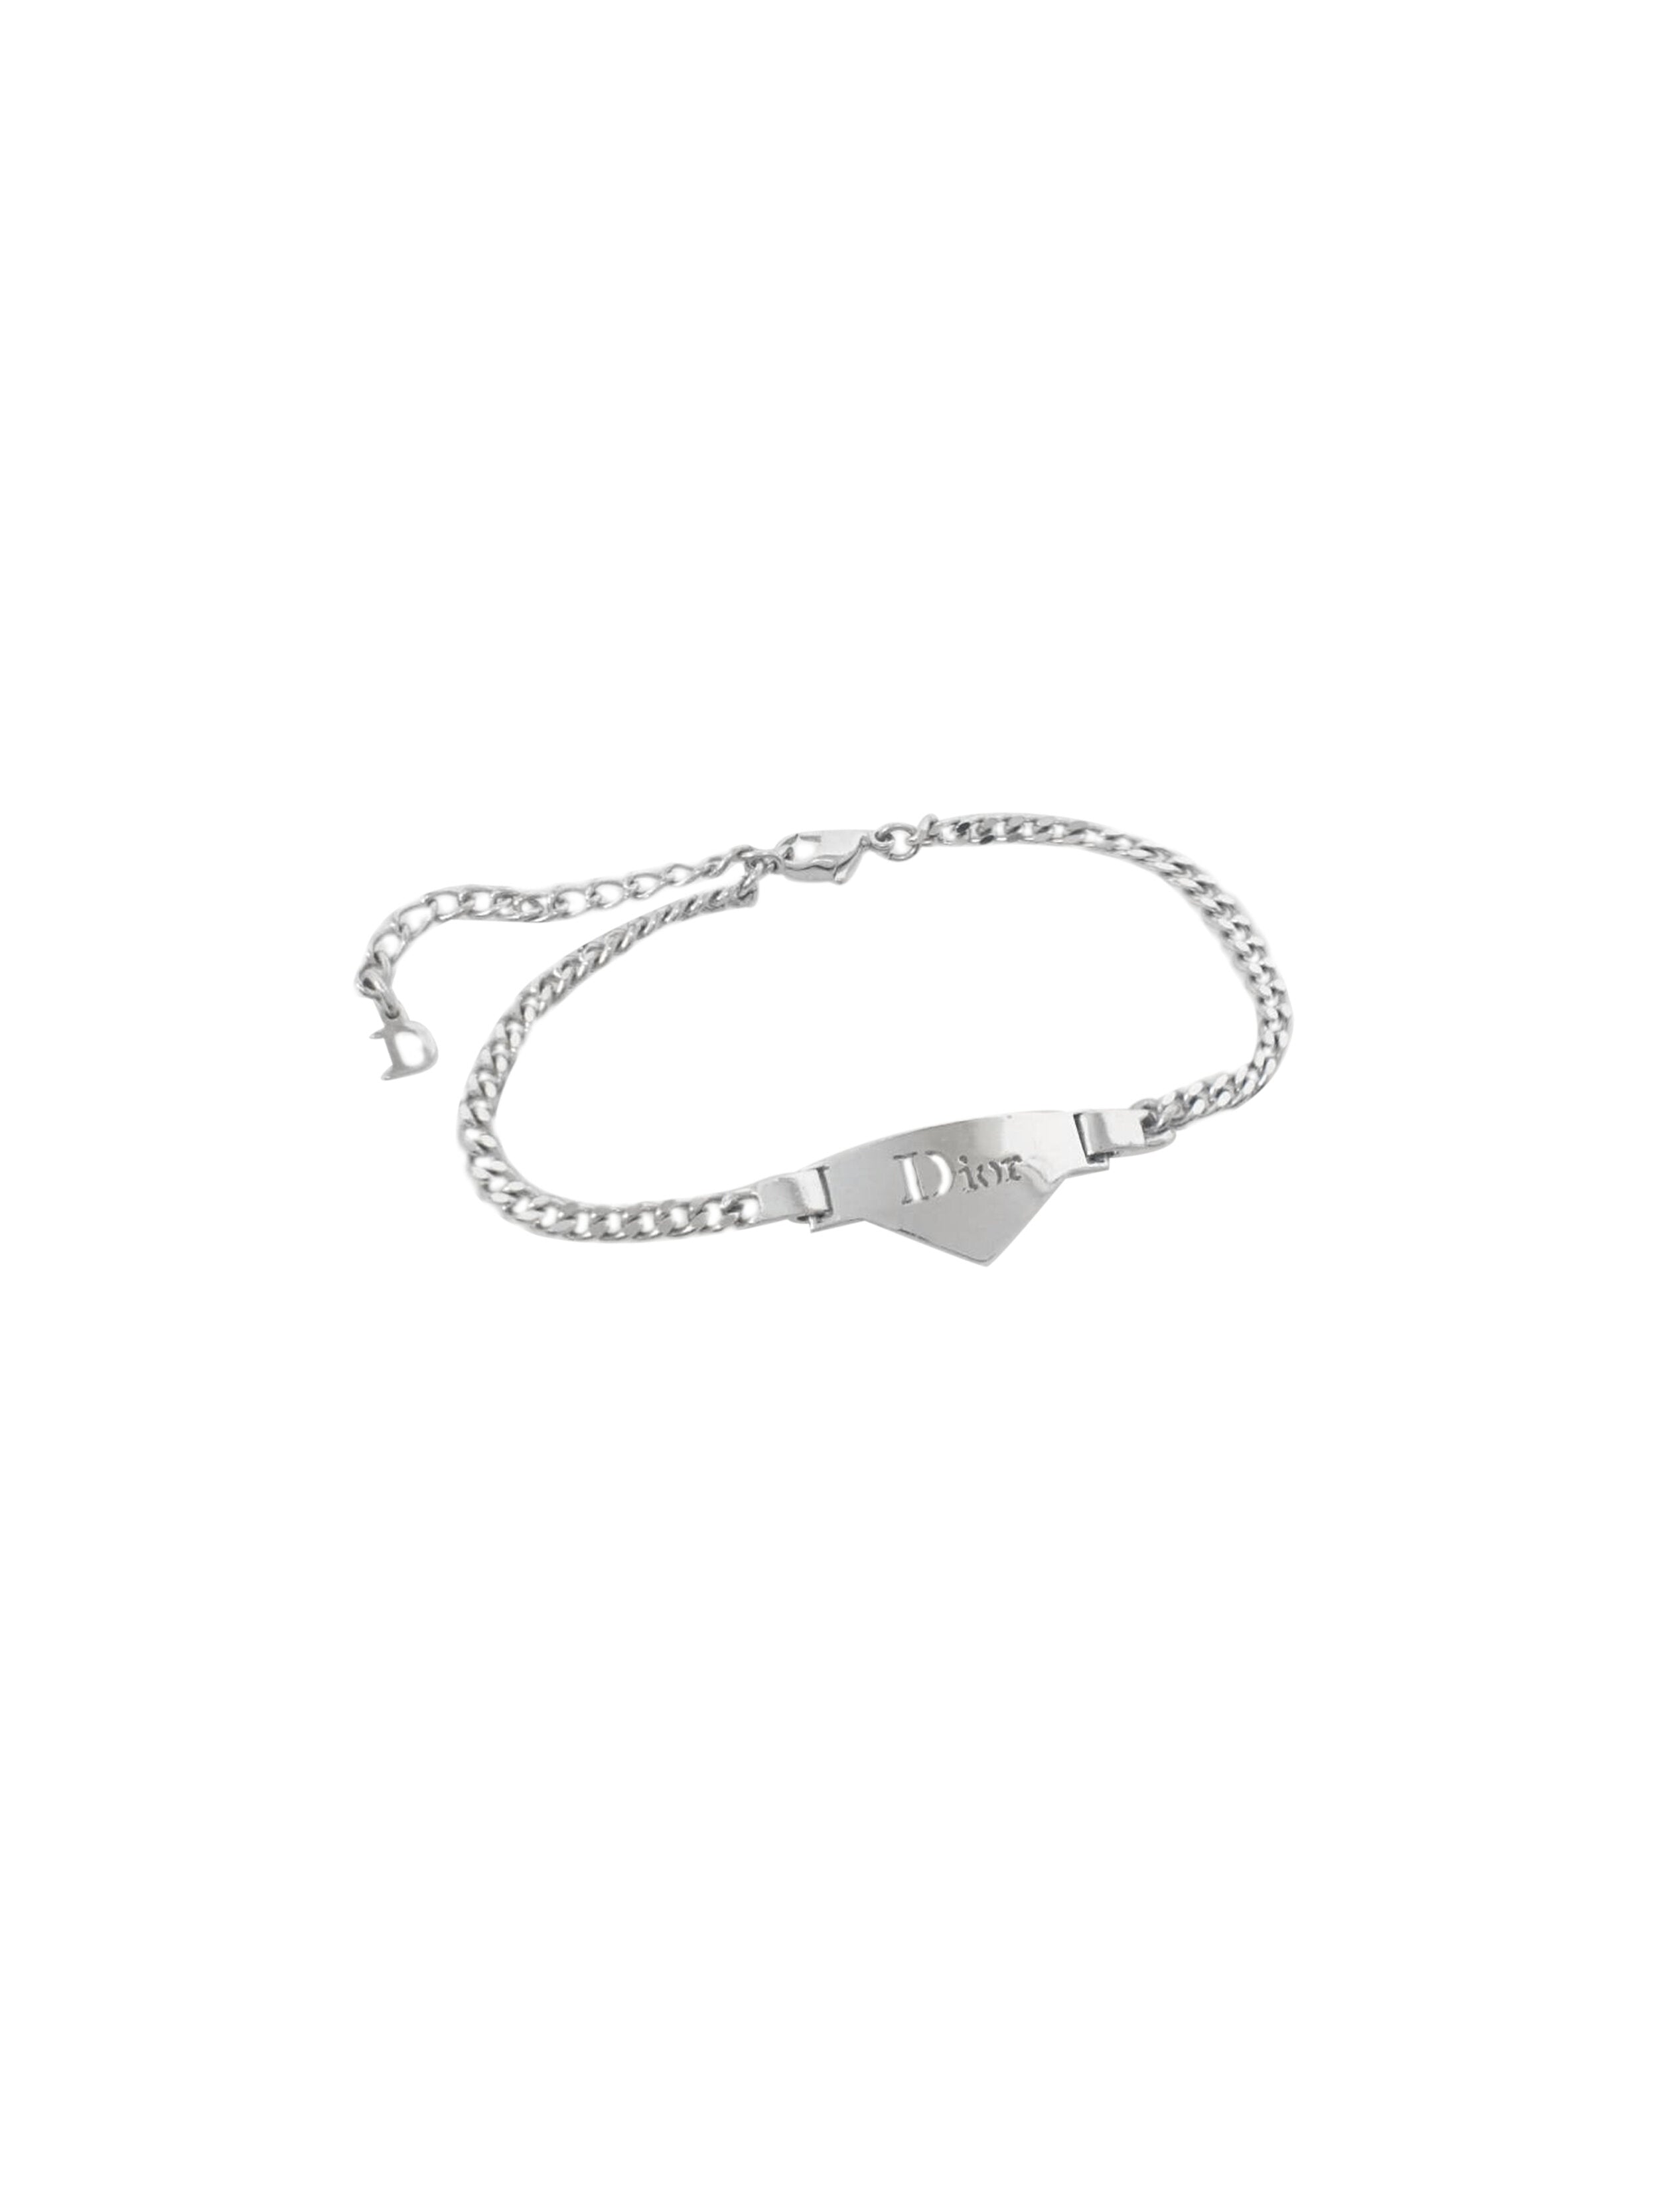 Christian Dior 2000s Silver Plate Bracelet